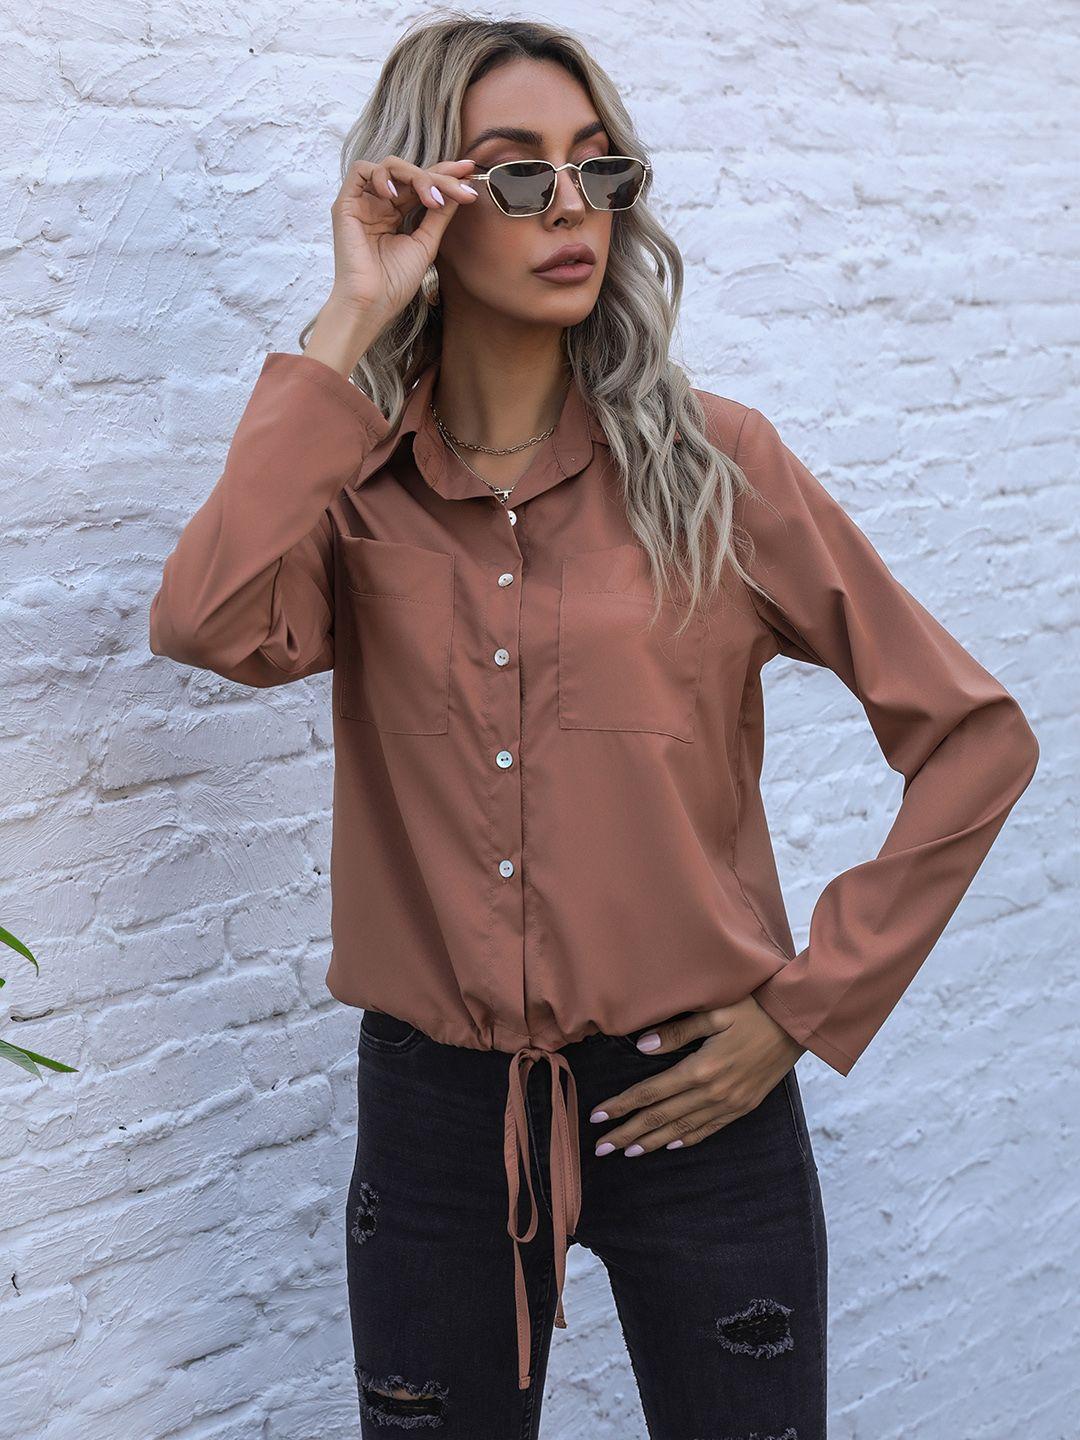 urbanic brown shirt style top